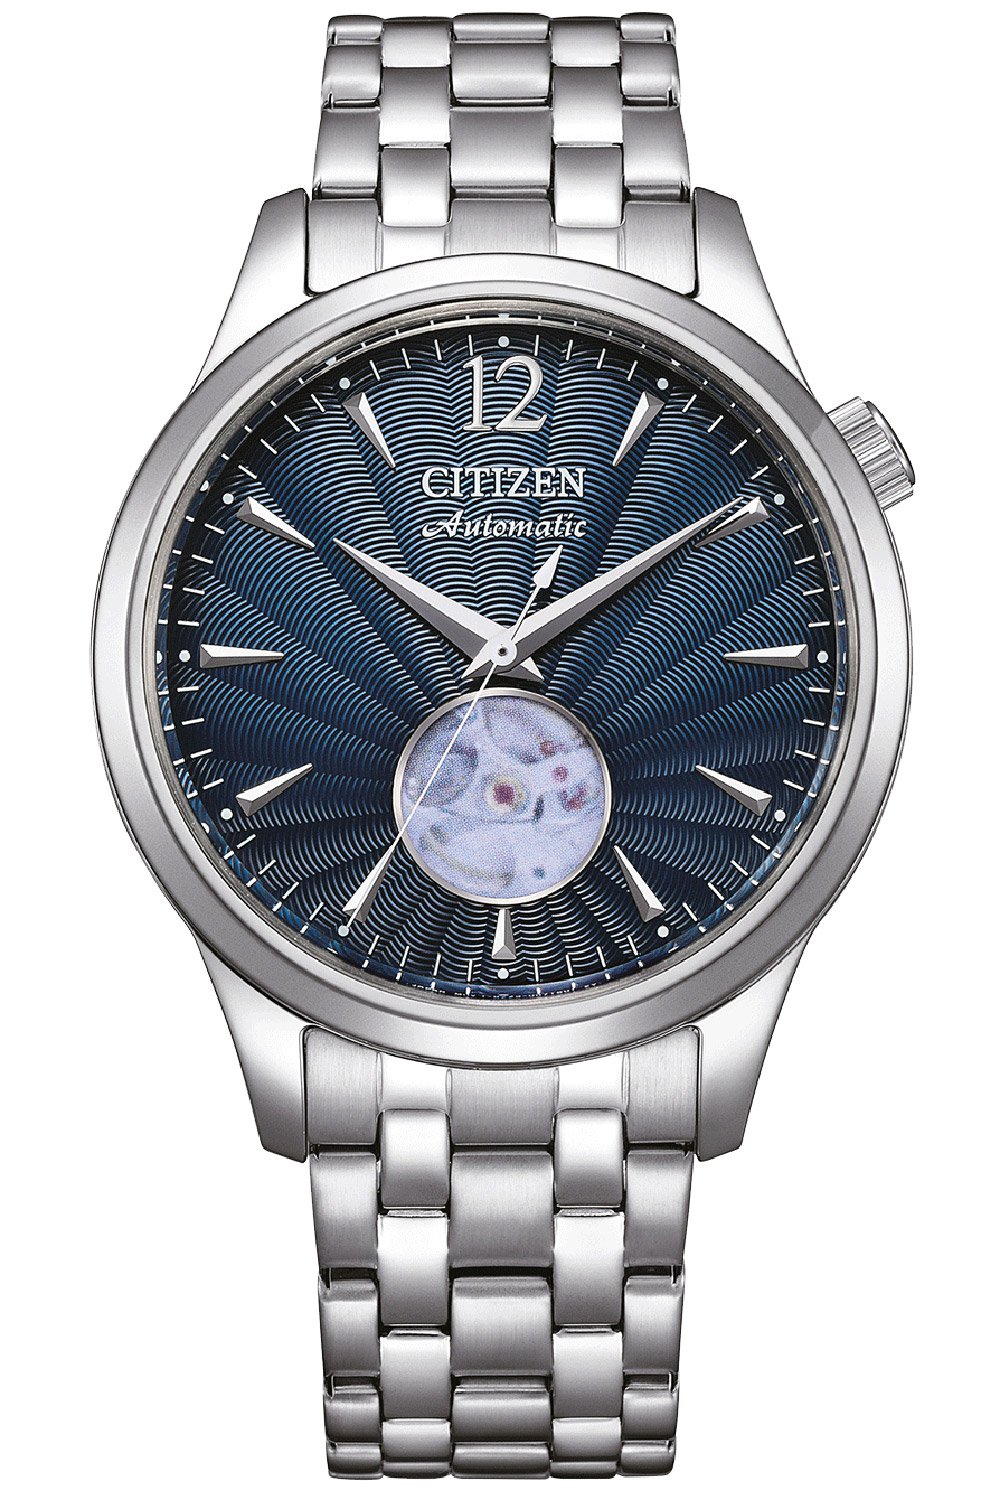 Citizen NH9131-73L Herren-Armbanduhr Automatik Stahl/Blau